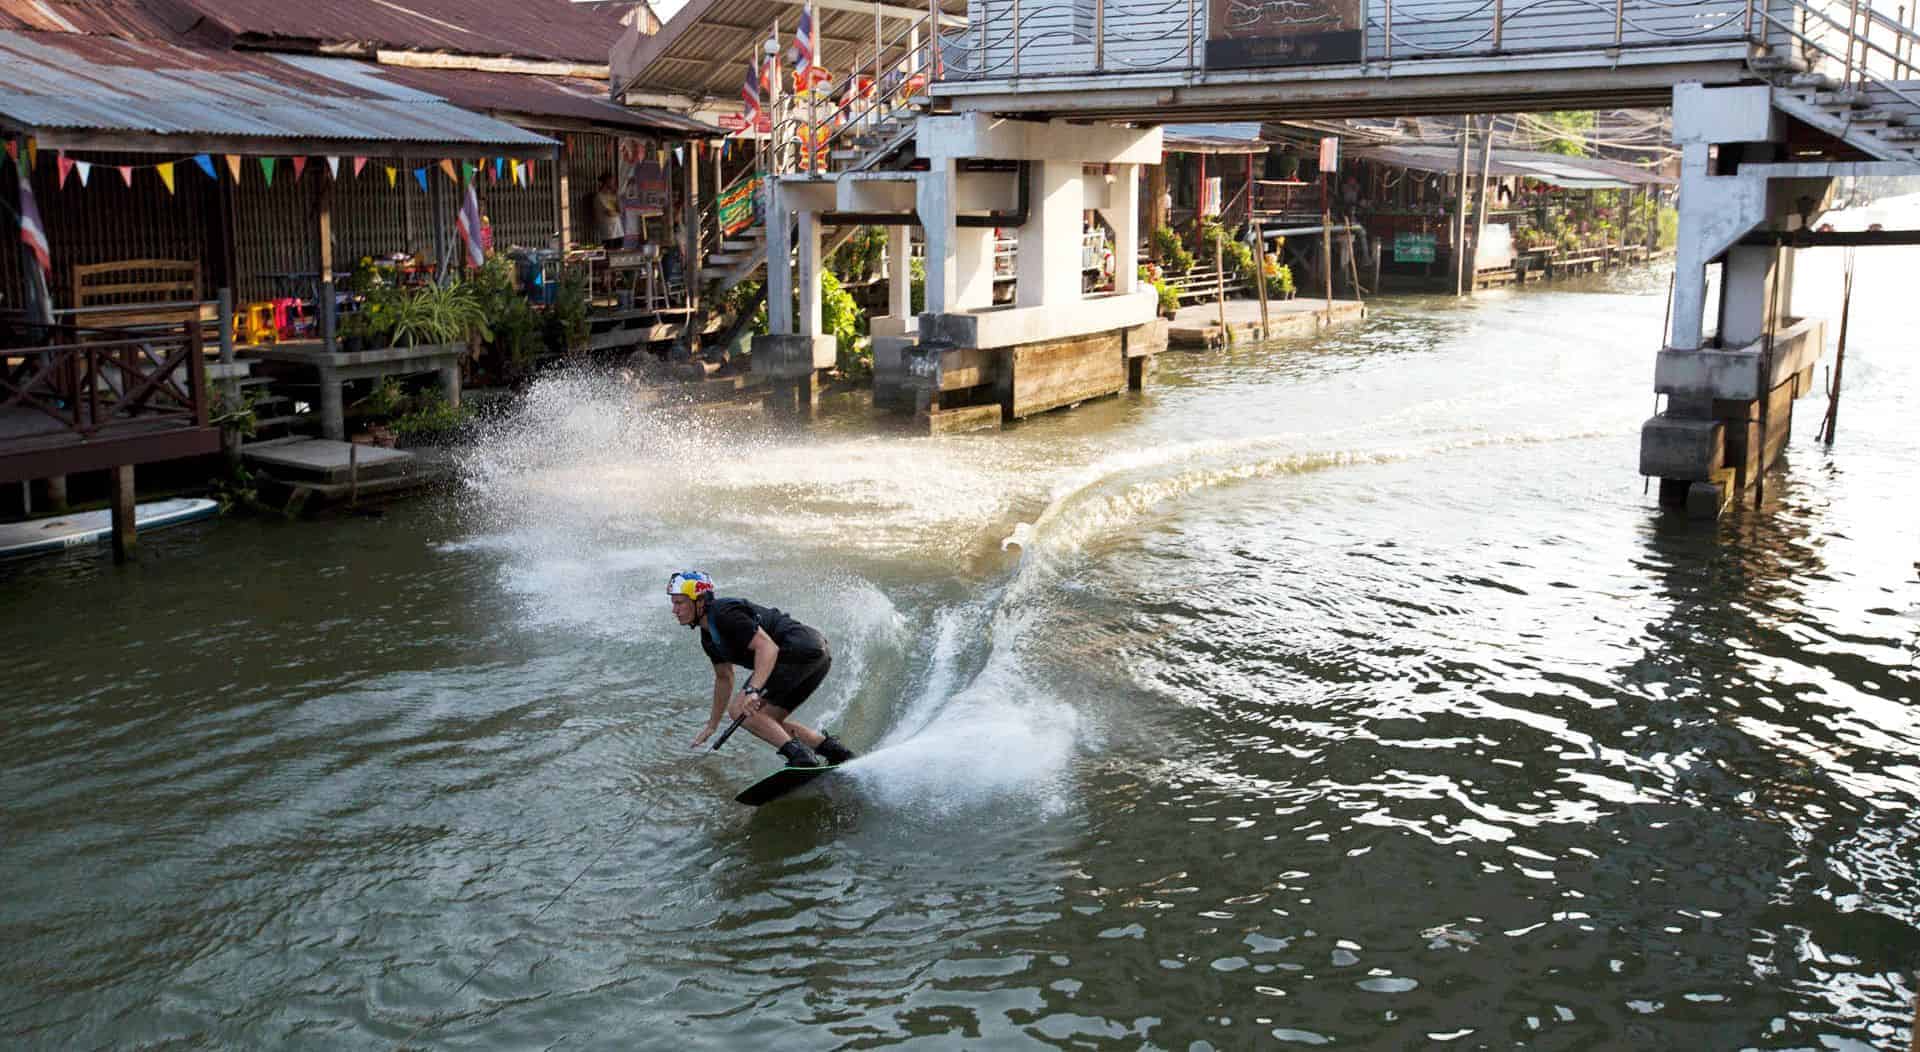 Wakeboarding Through Bangkok’s Floating Markets with Dominik Gührs